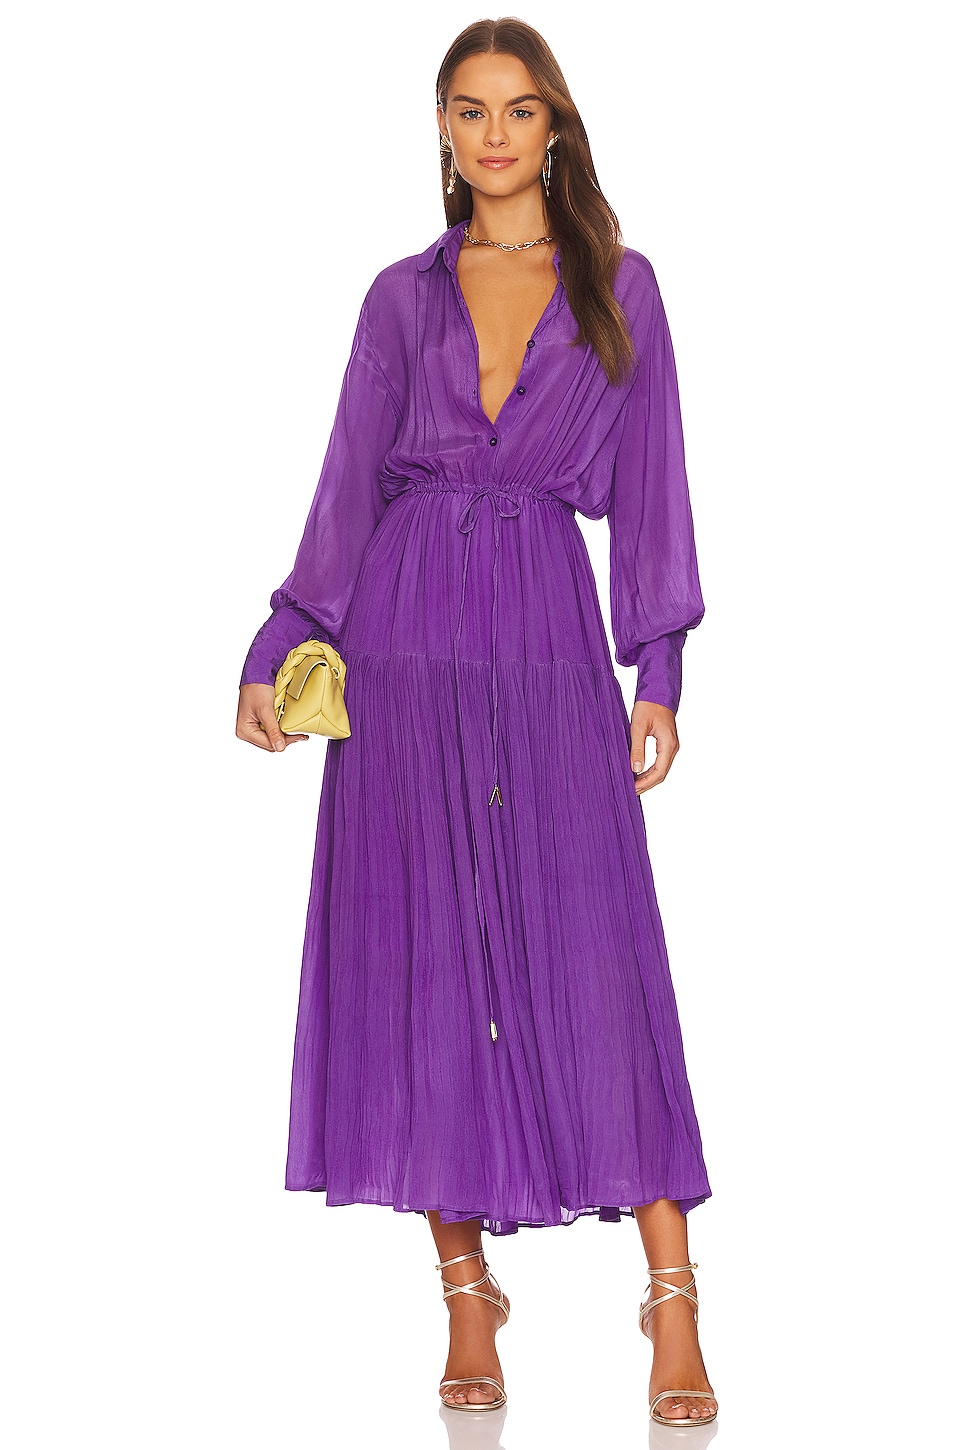 Karina Grimaldi Cassandra Dress in Purple | REVOLVE